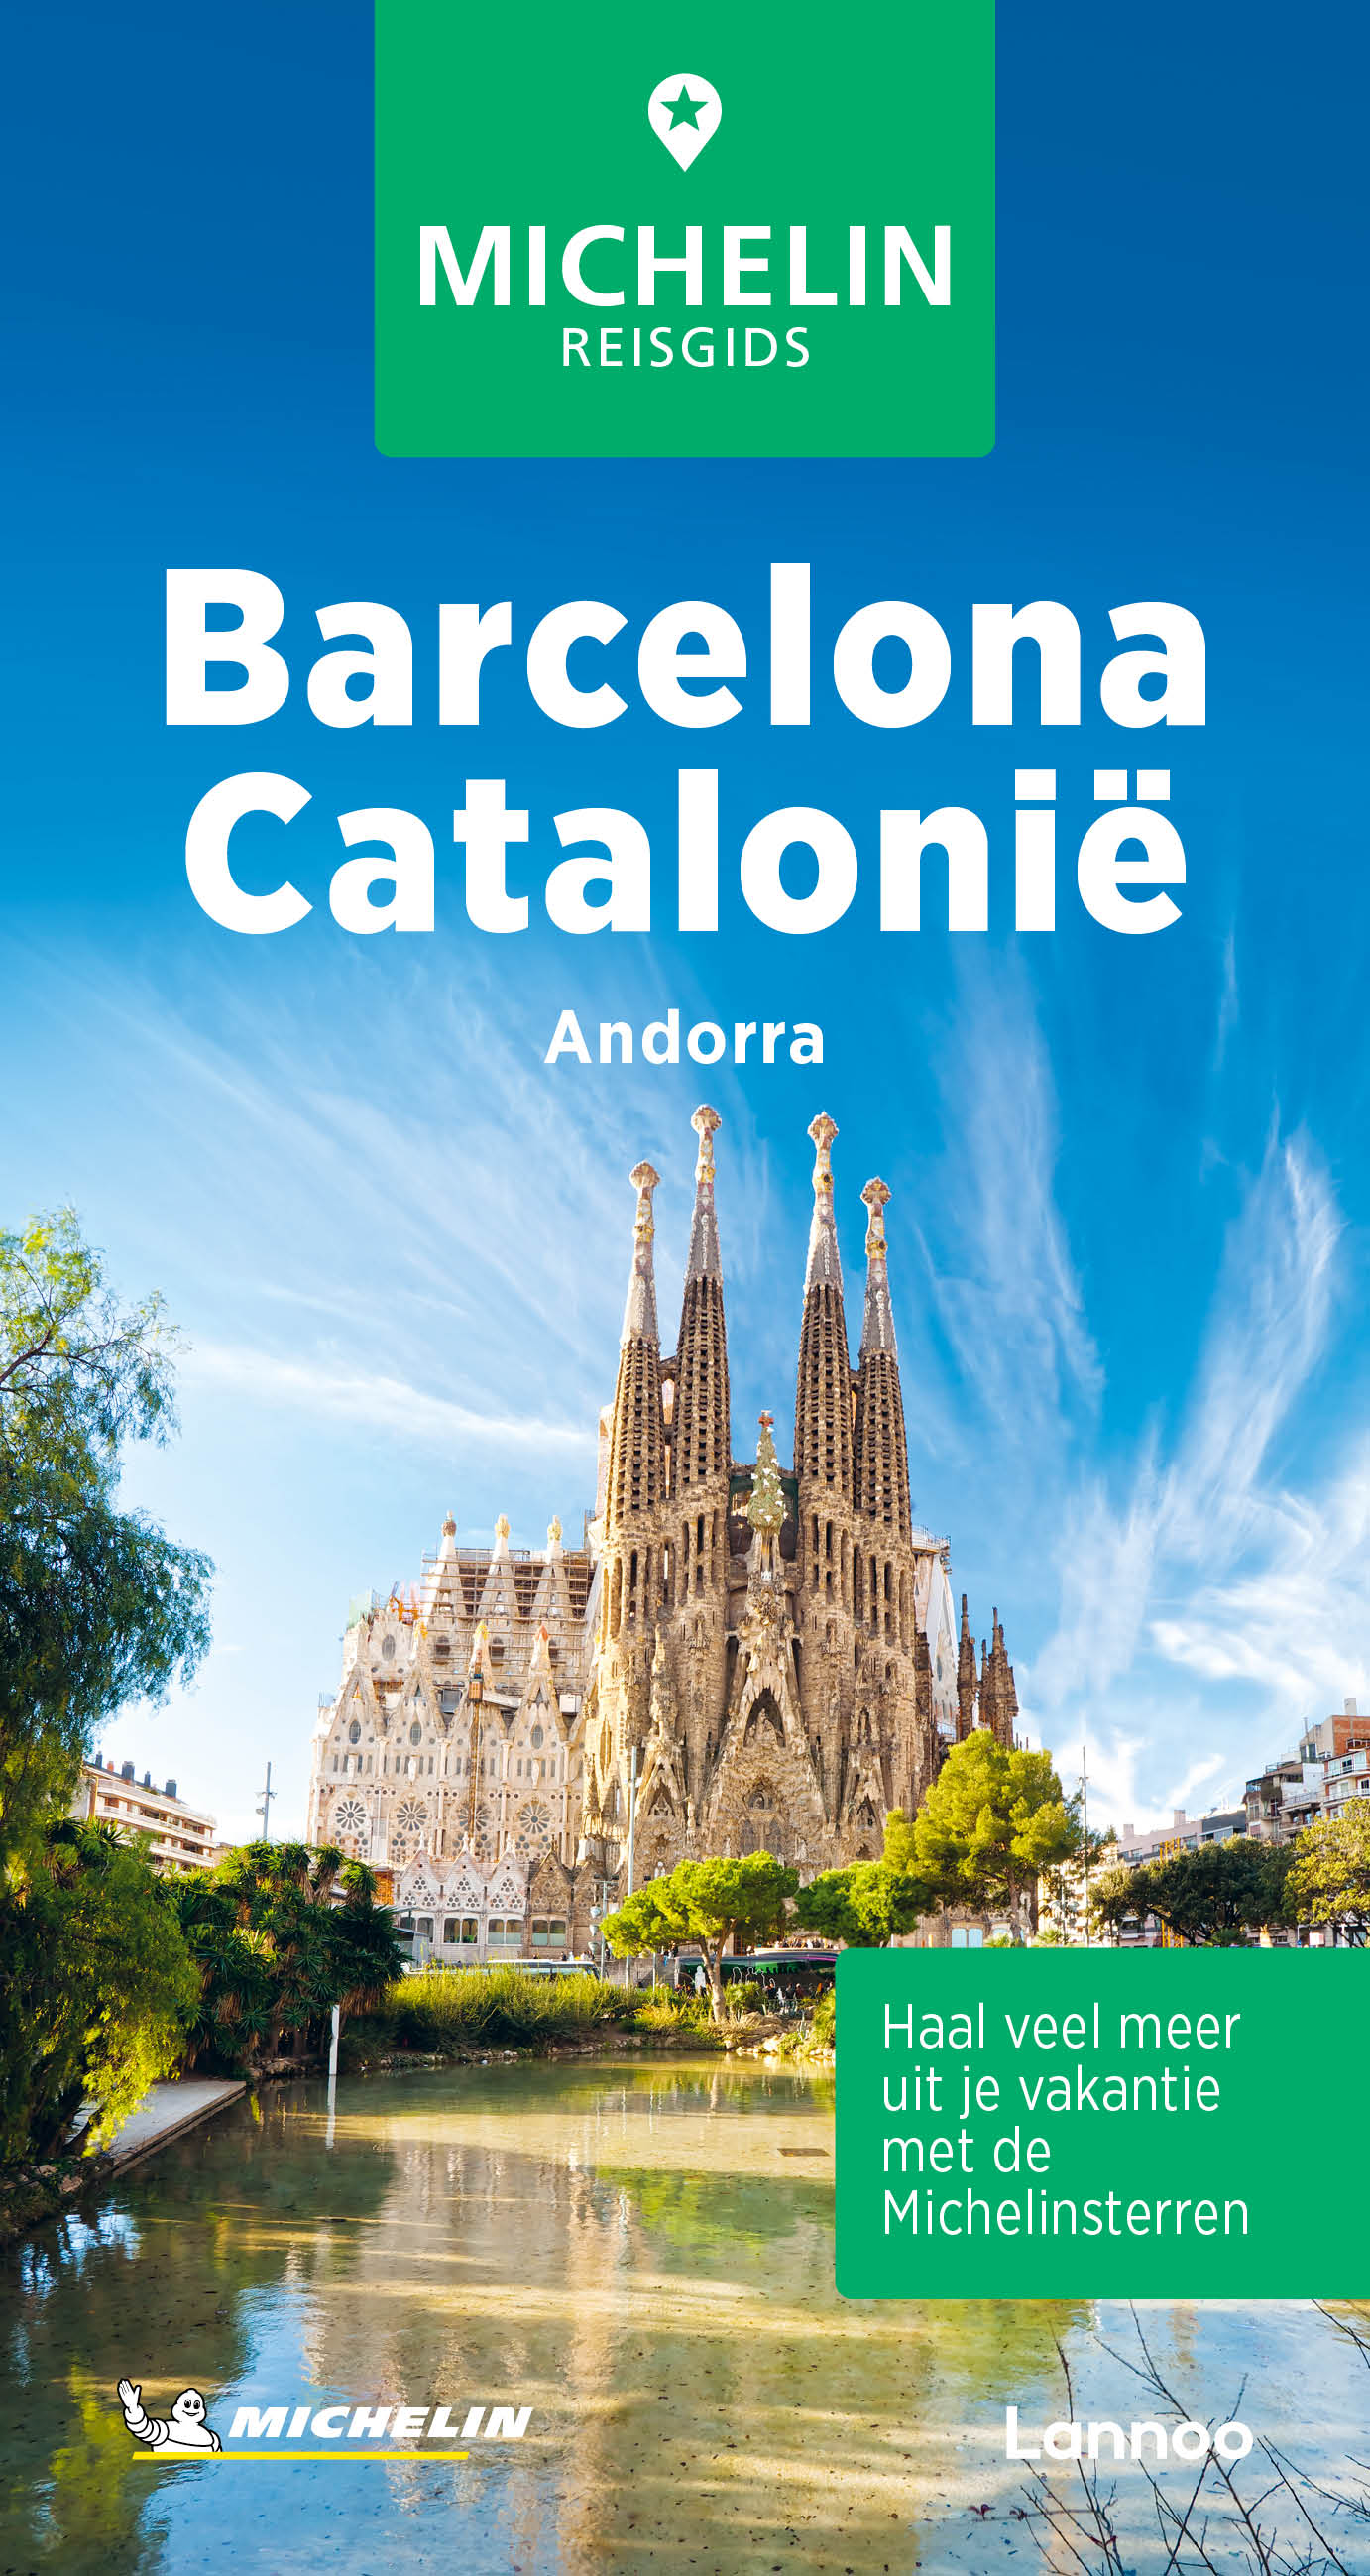 Online bestellen: Reisgids Michelin groene gids Michelin Reisgids Barcelona-Catalonië-Andorra | Lannoo